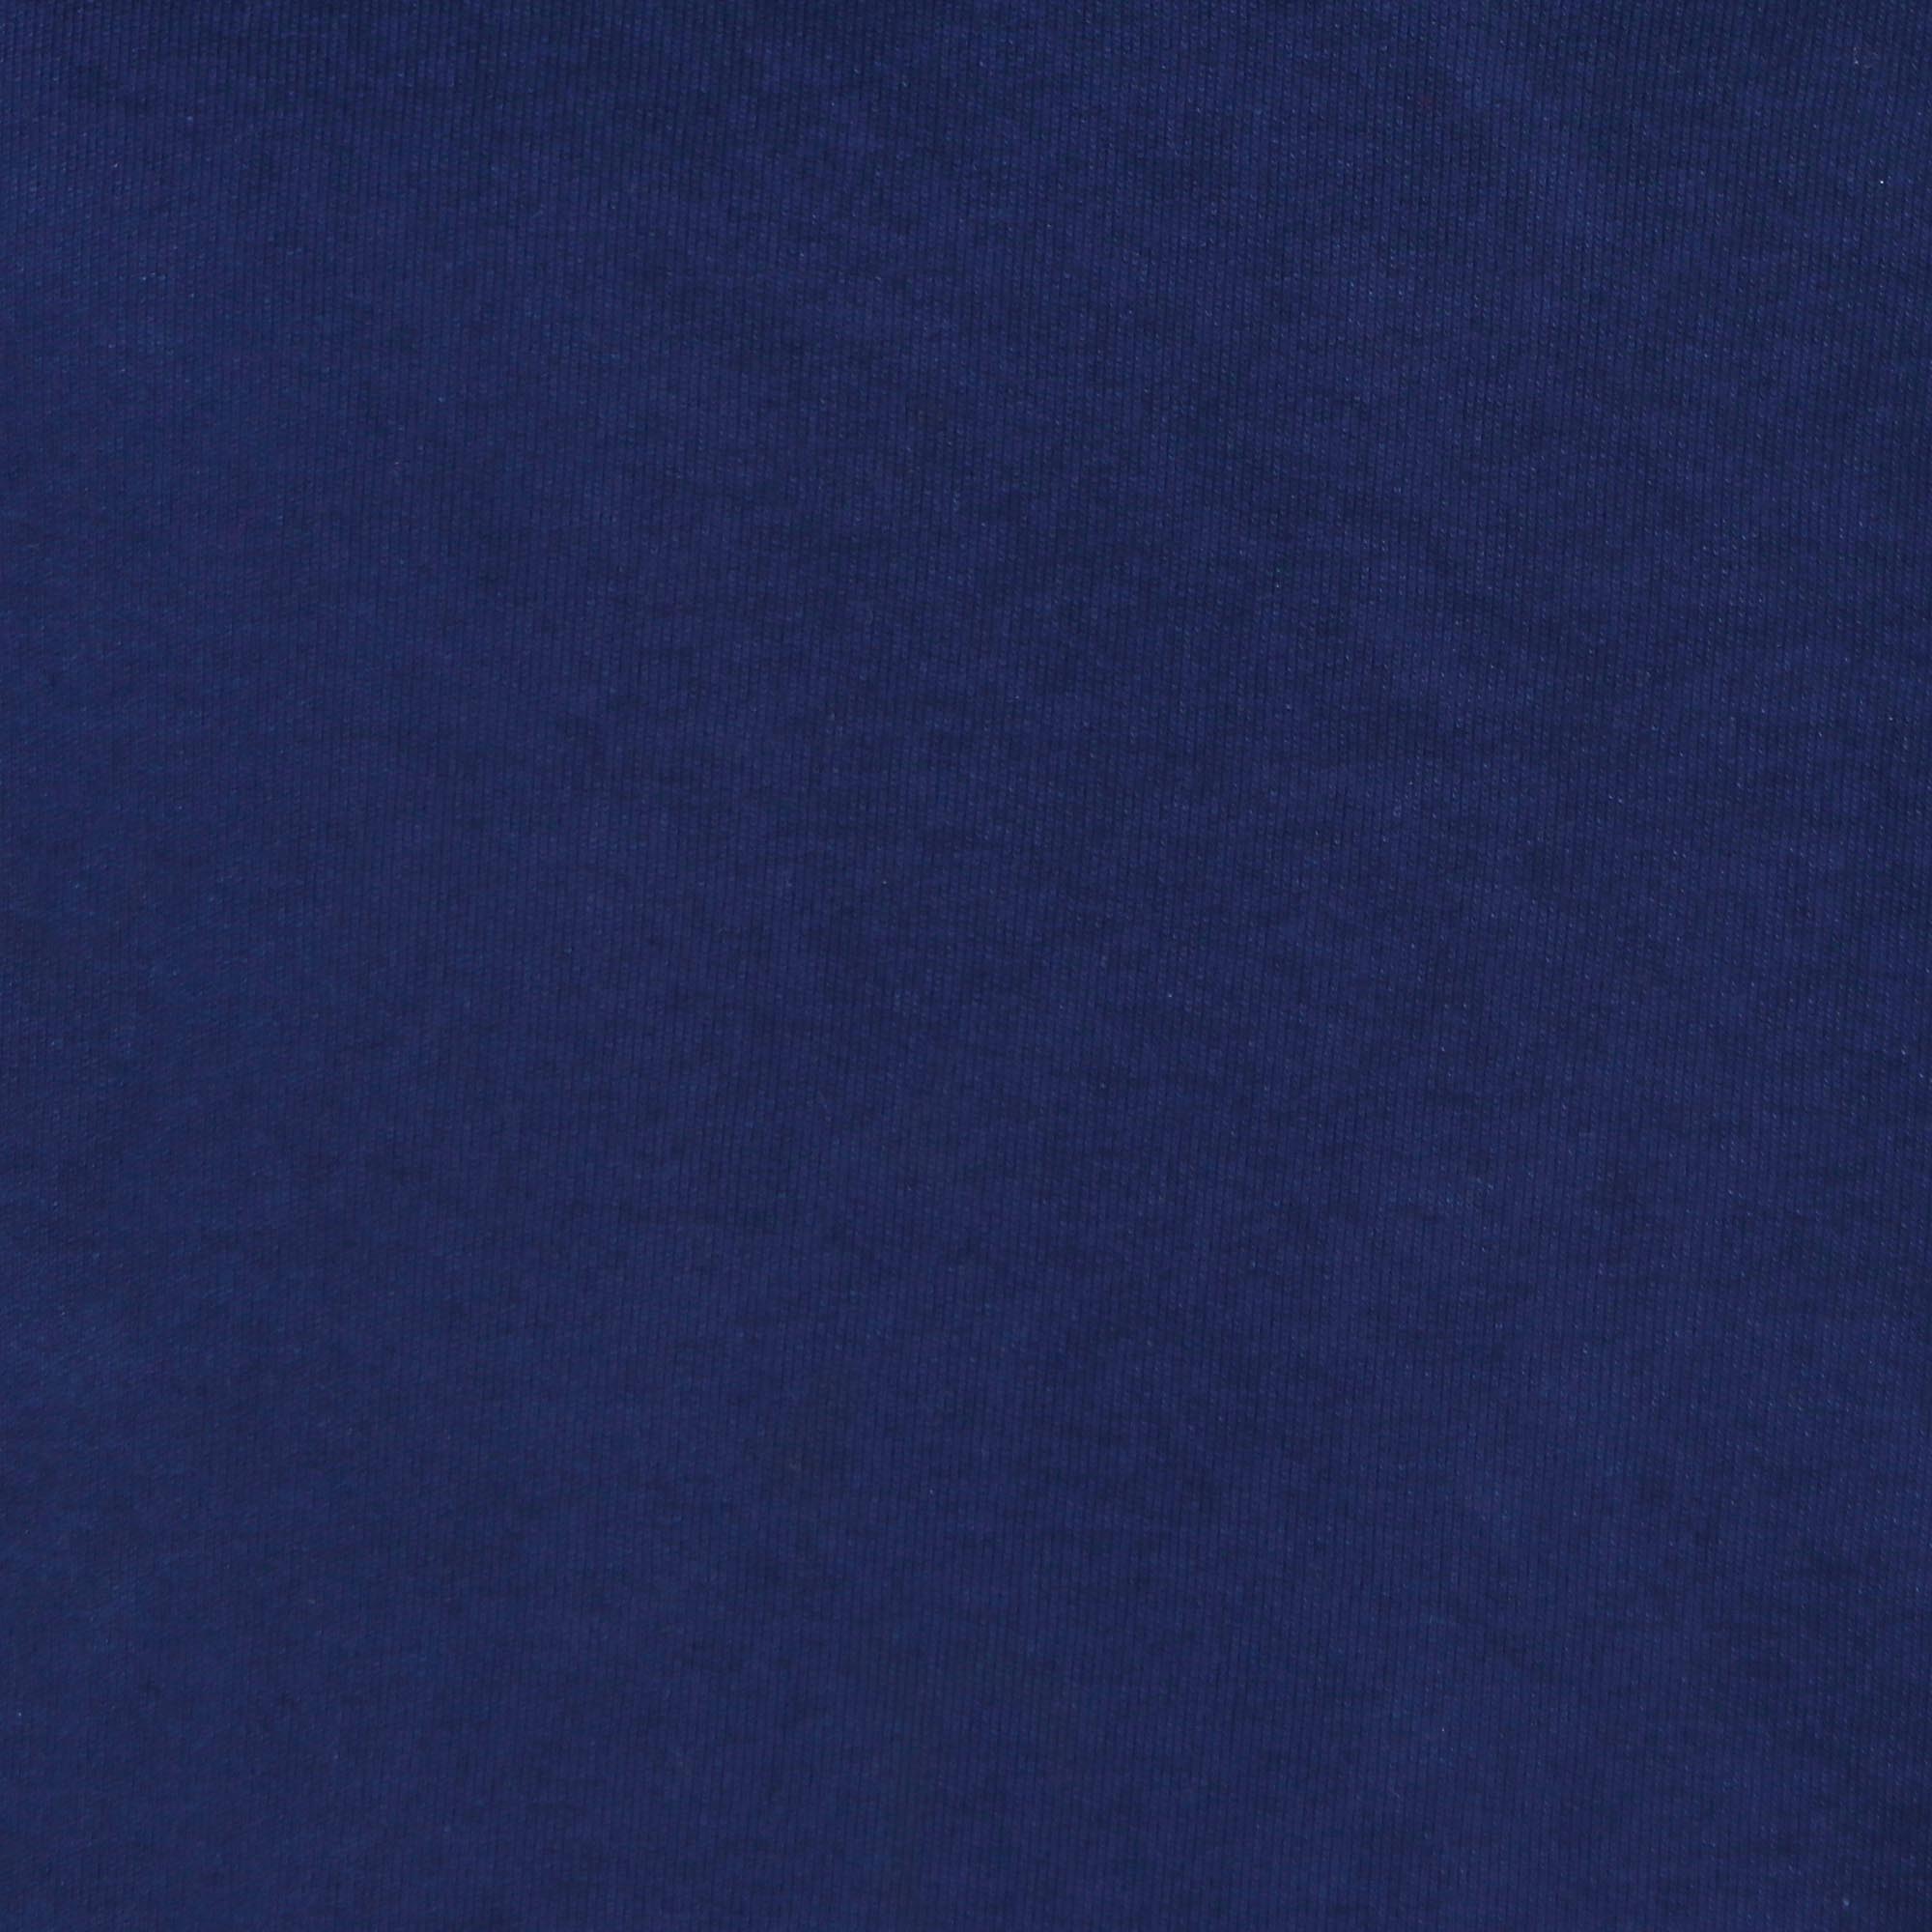 Мужская футболка-поло Diva Teks синяя (DTD-10), цвет синий, размер 52-54 - фото 6